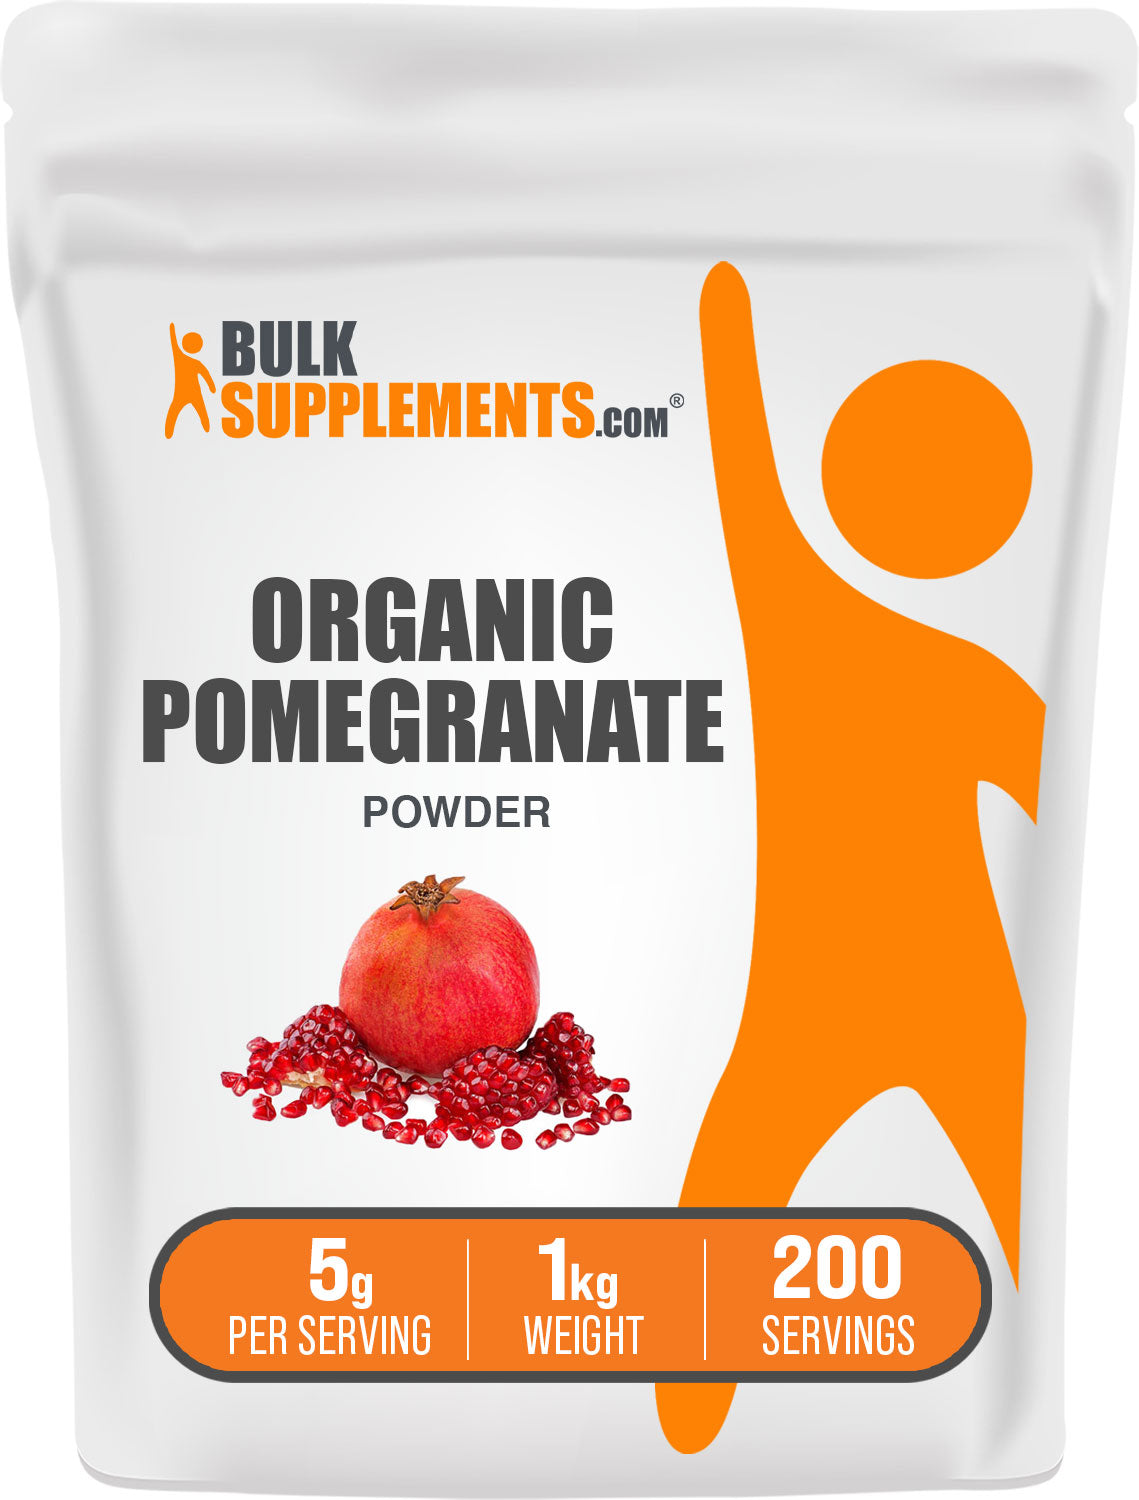 BulkSupplements.com Organic Pomegranate Powder 1kg Bag